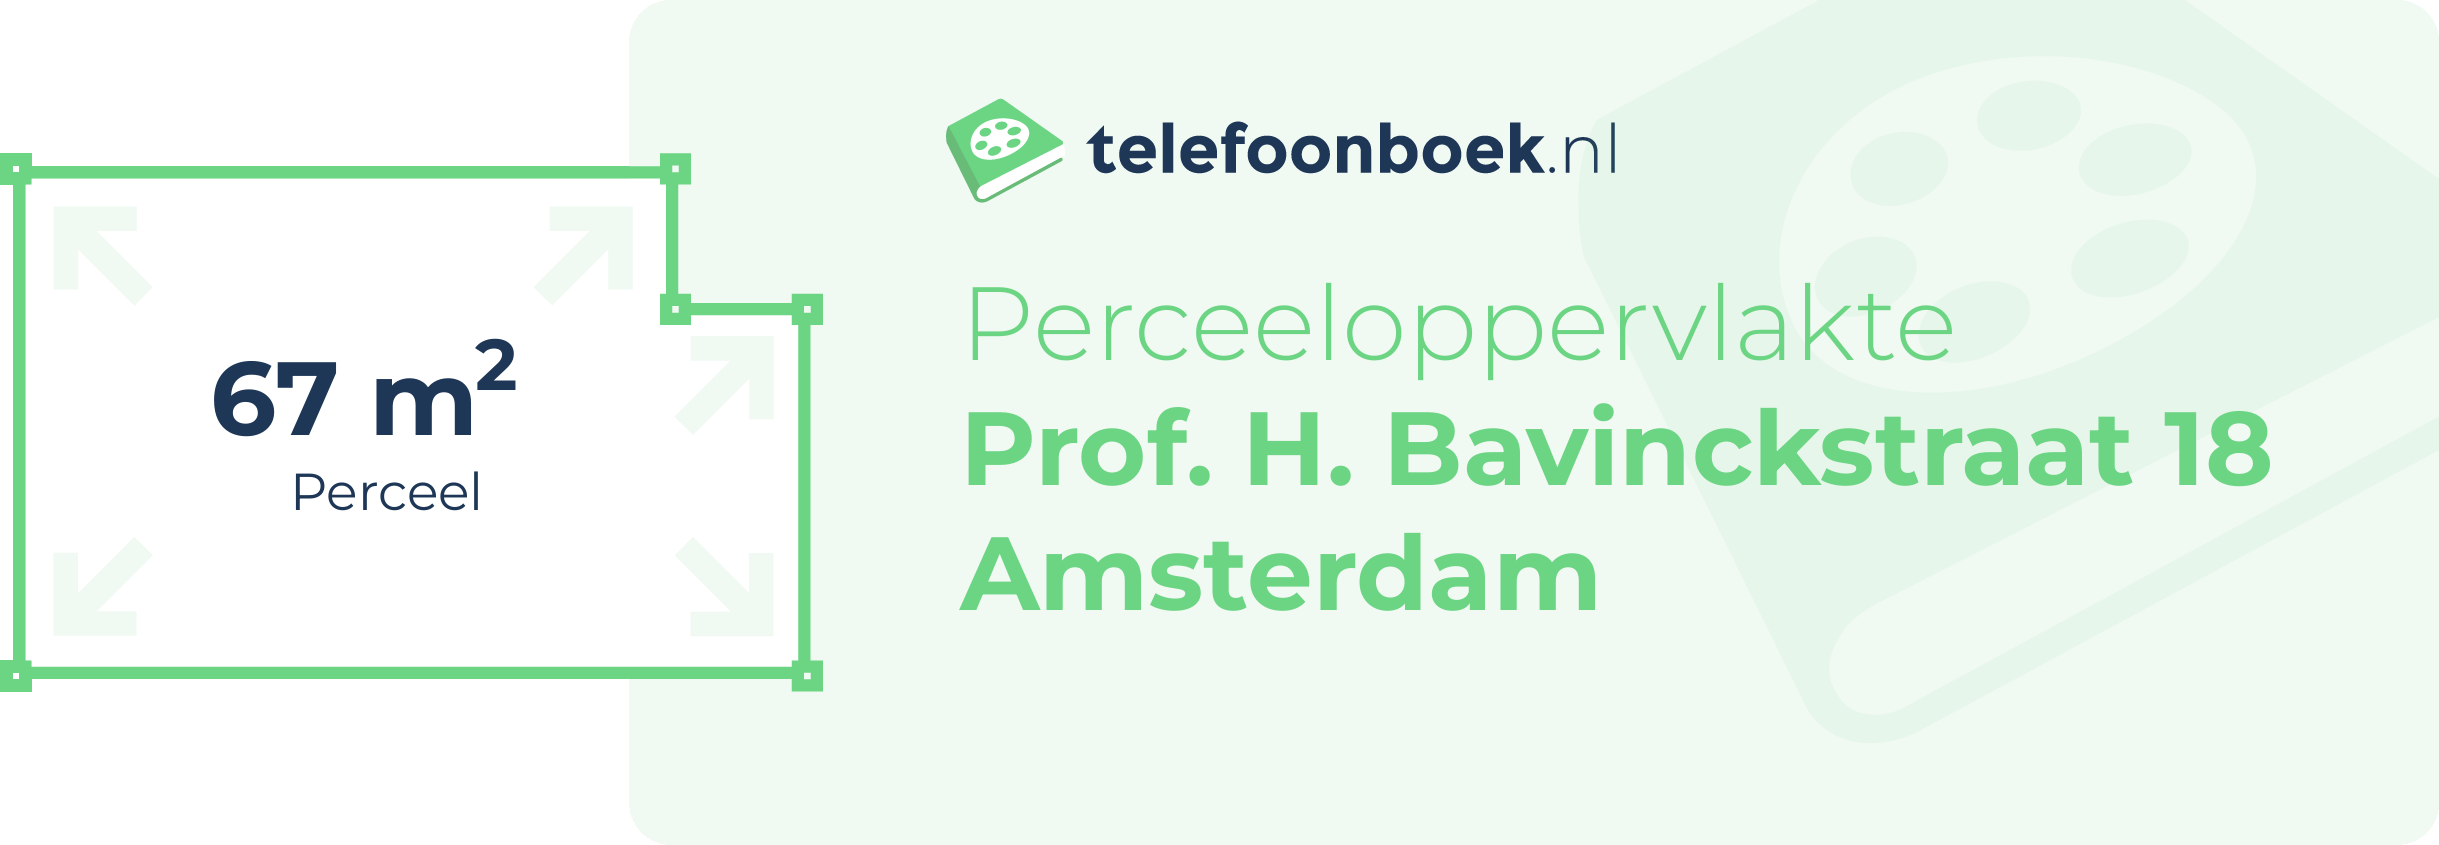 Perceeloppervlakte Prof. H. Bavinckstraat 18 Amsterdam